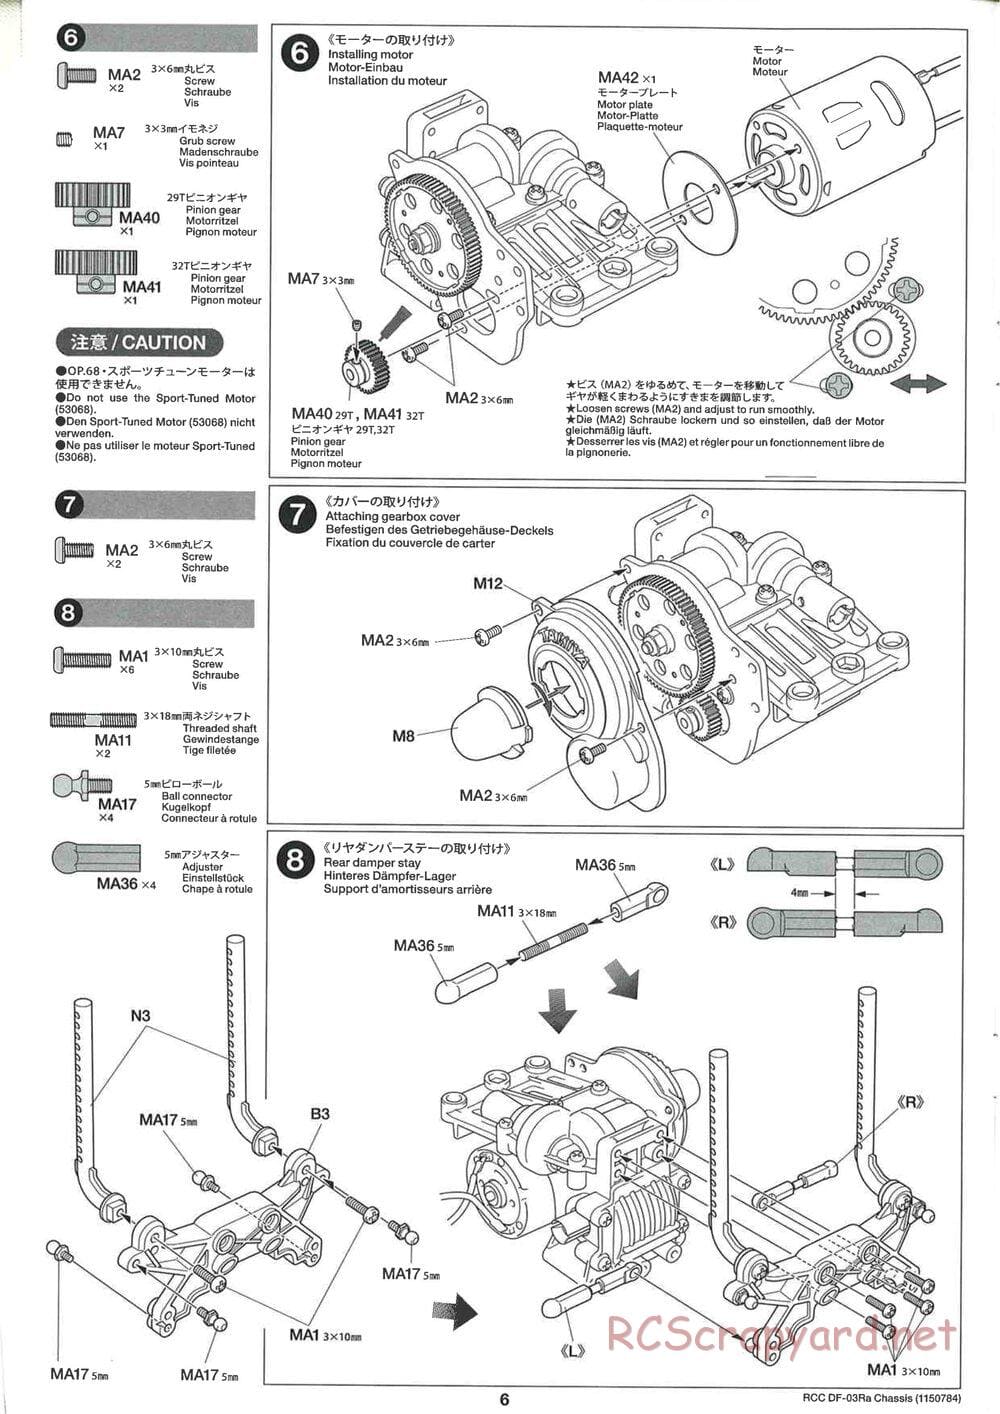 Tamiya - DF-03Ra Chassis - Manual - Page 6